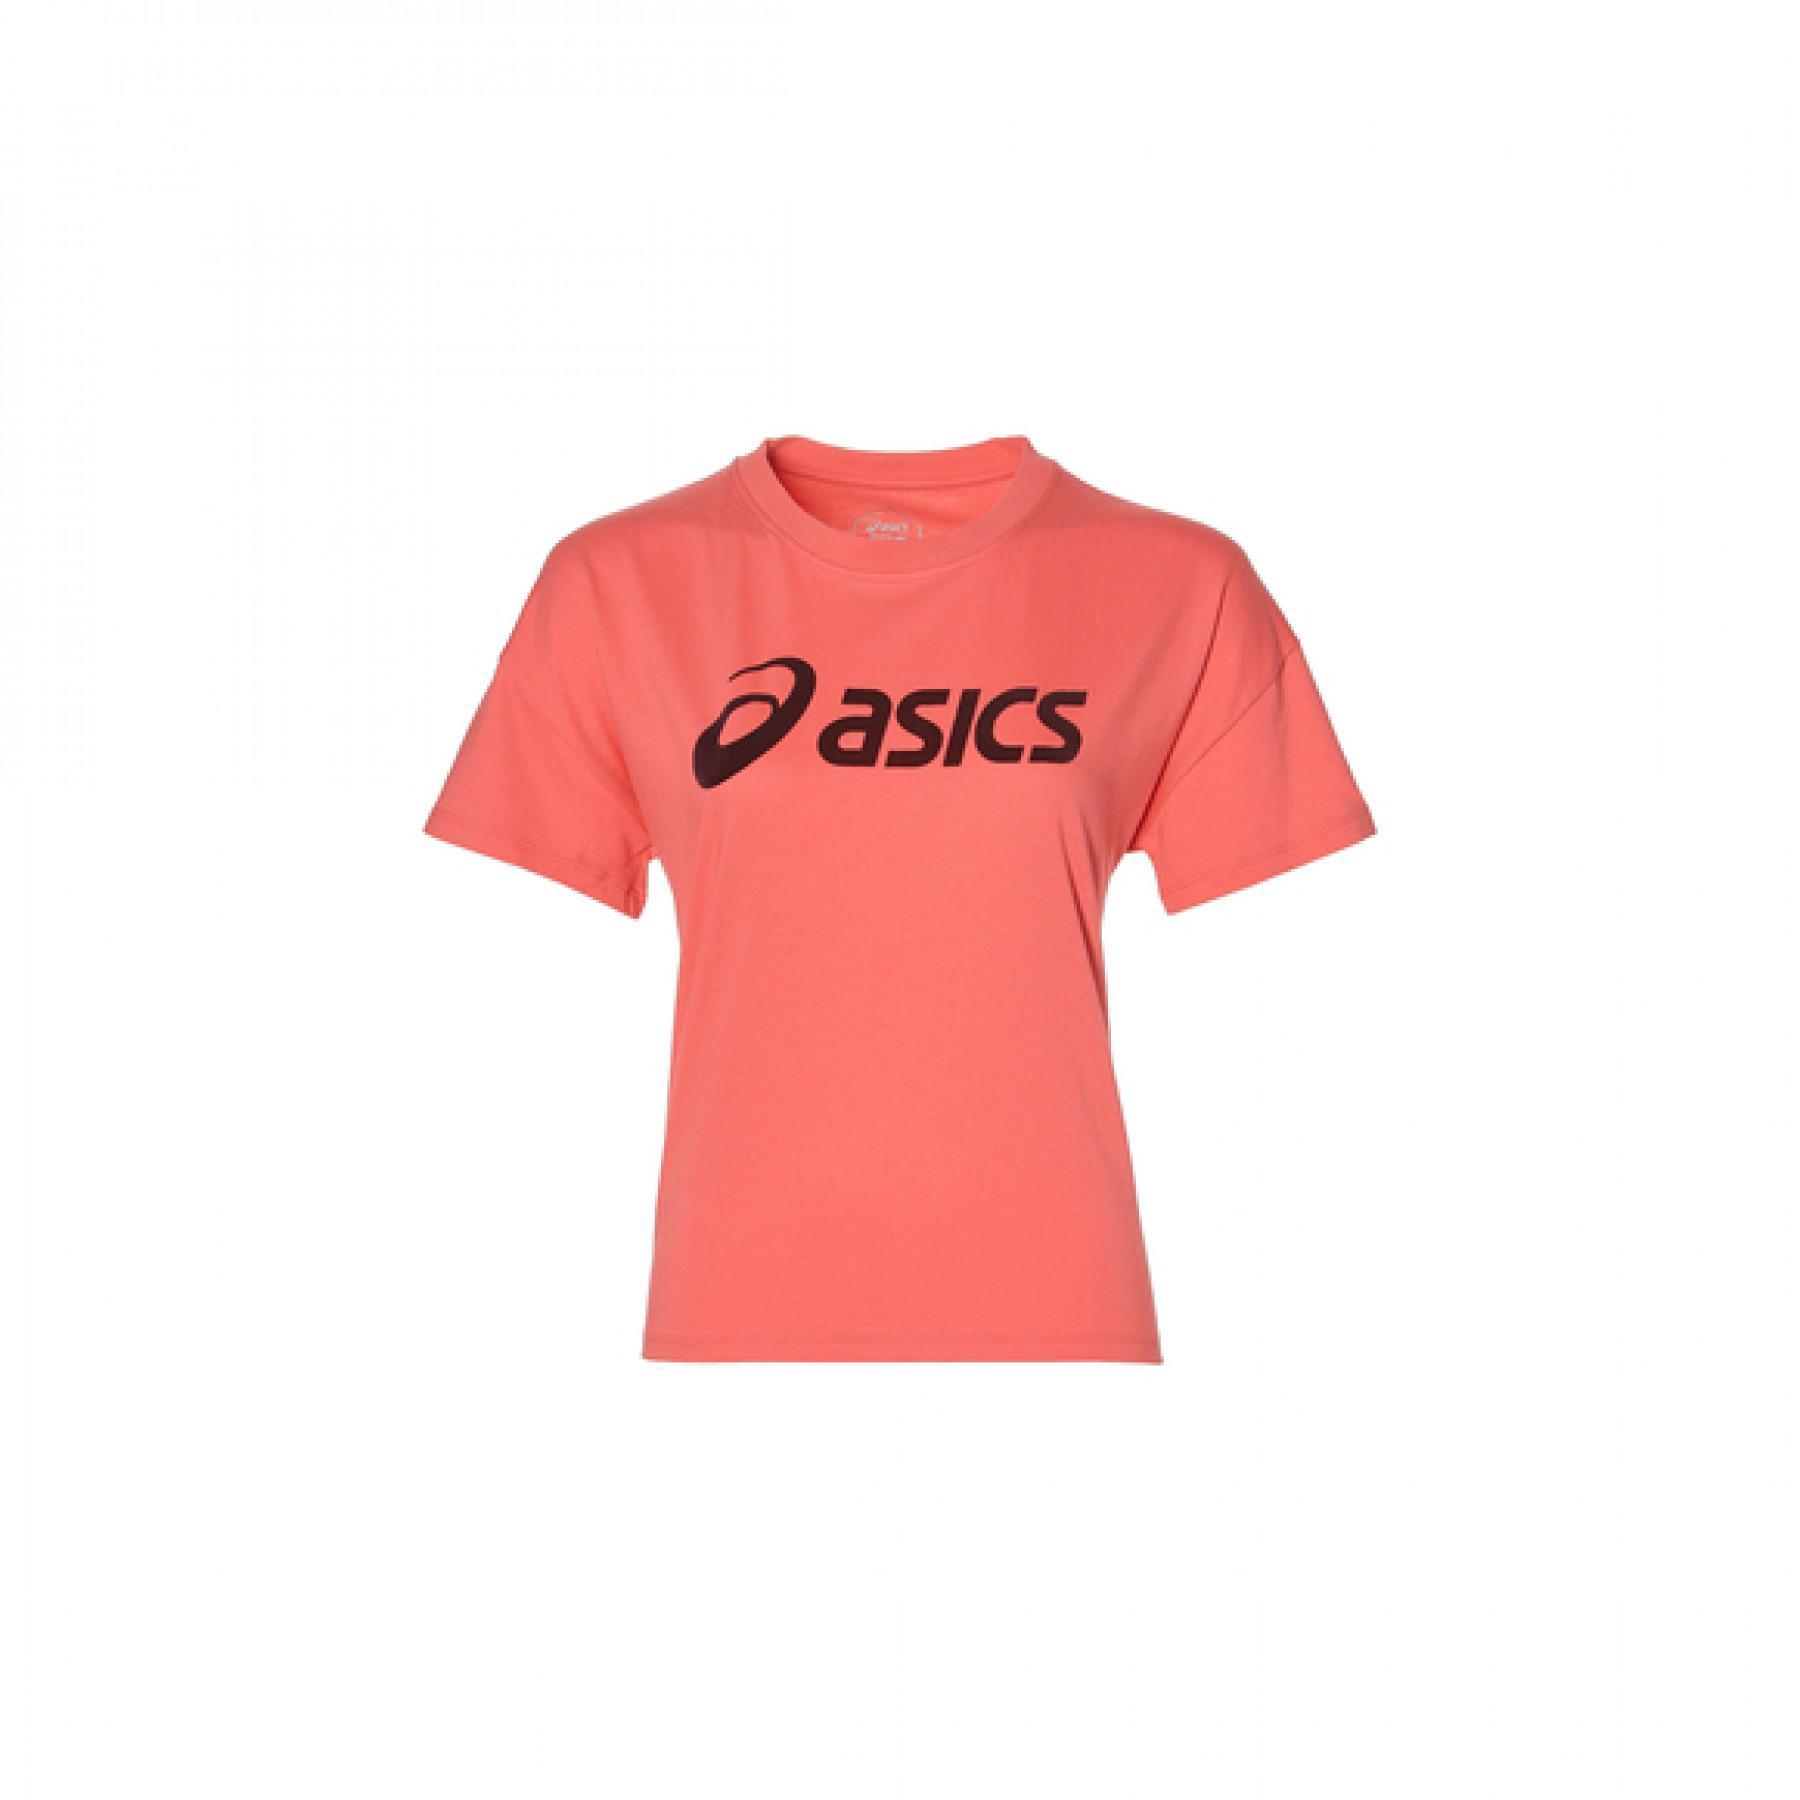 Camiseta de mujer Asics big logo